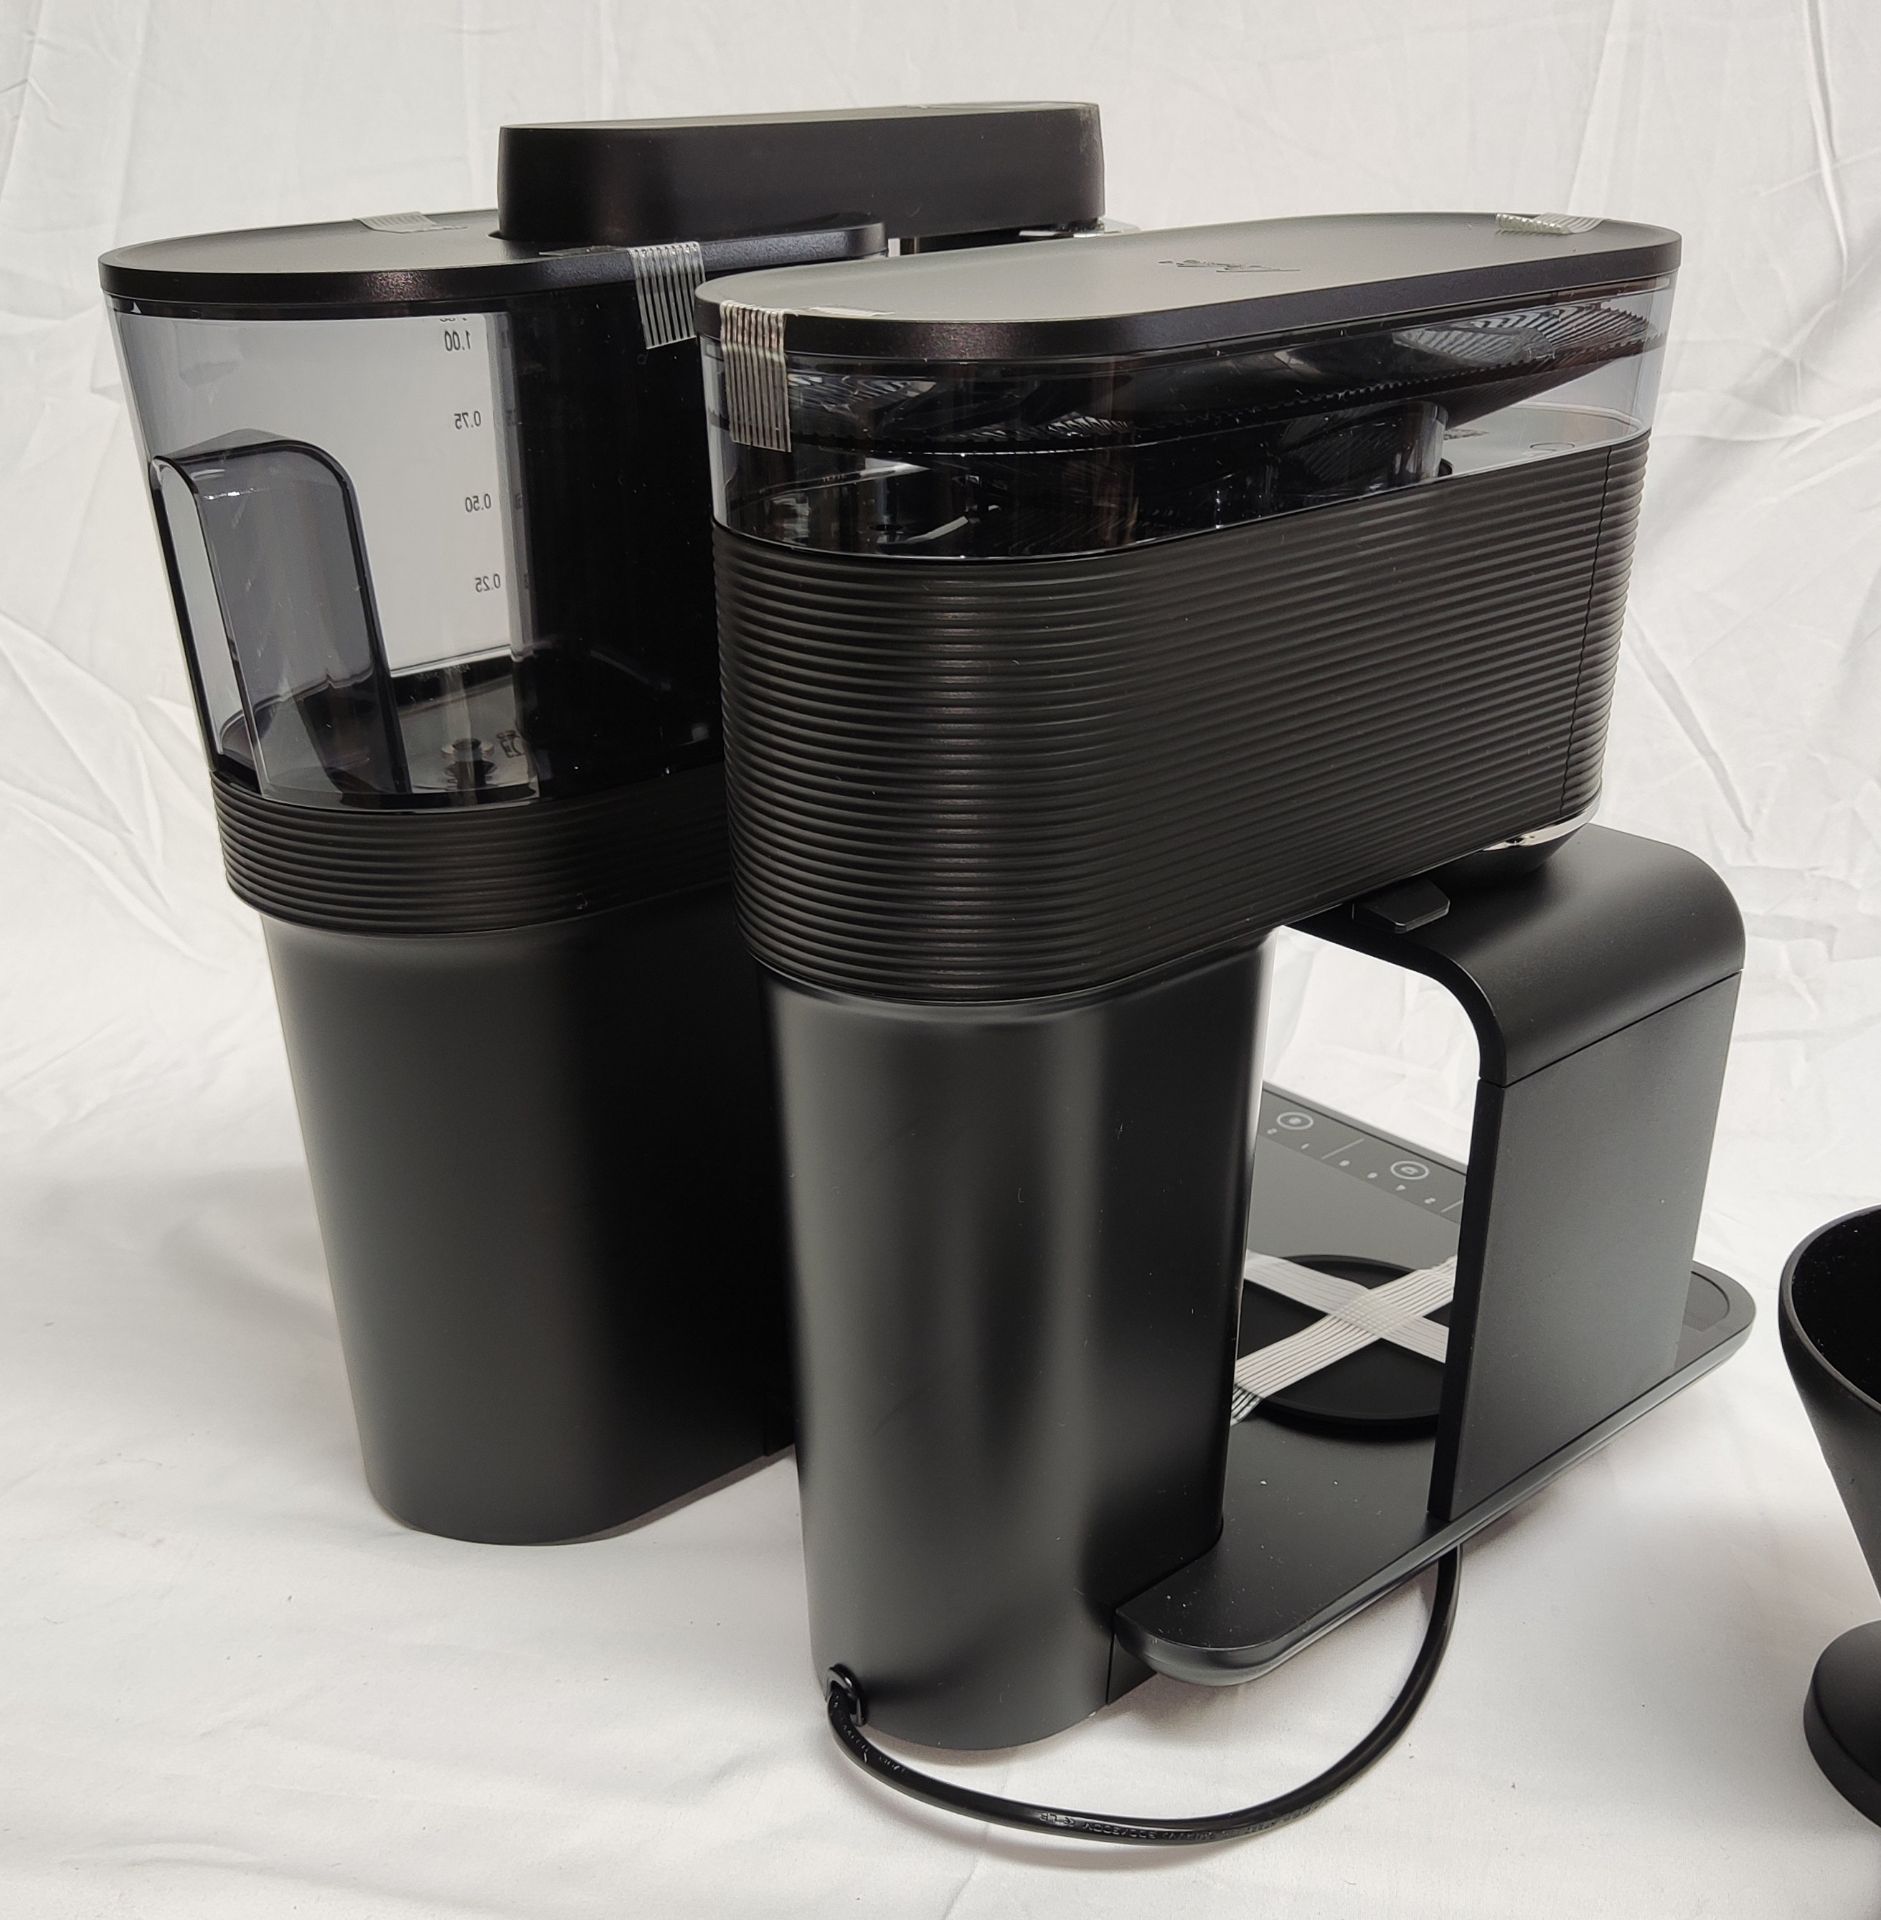 1 x MELITTA Epos Coffee Machine With Grinder - Boxed - Original RRP £399 - Ref: 7129012/HJL350/C19/ - Image 6 of 14